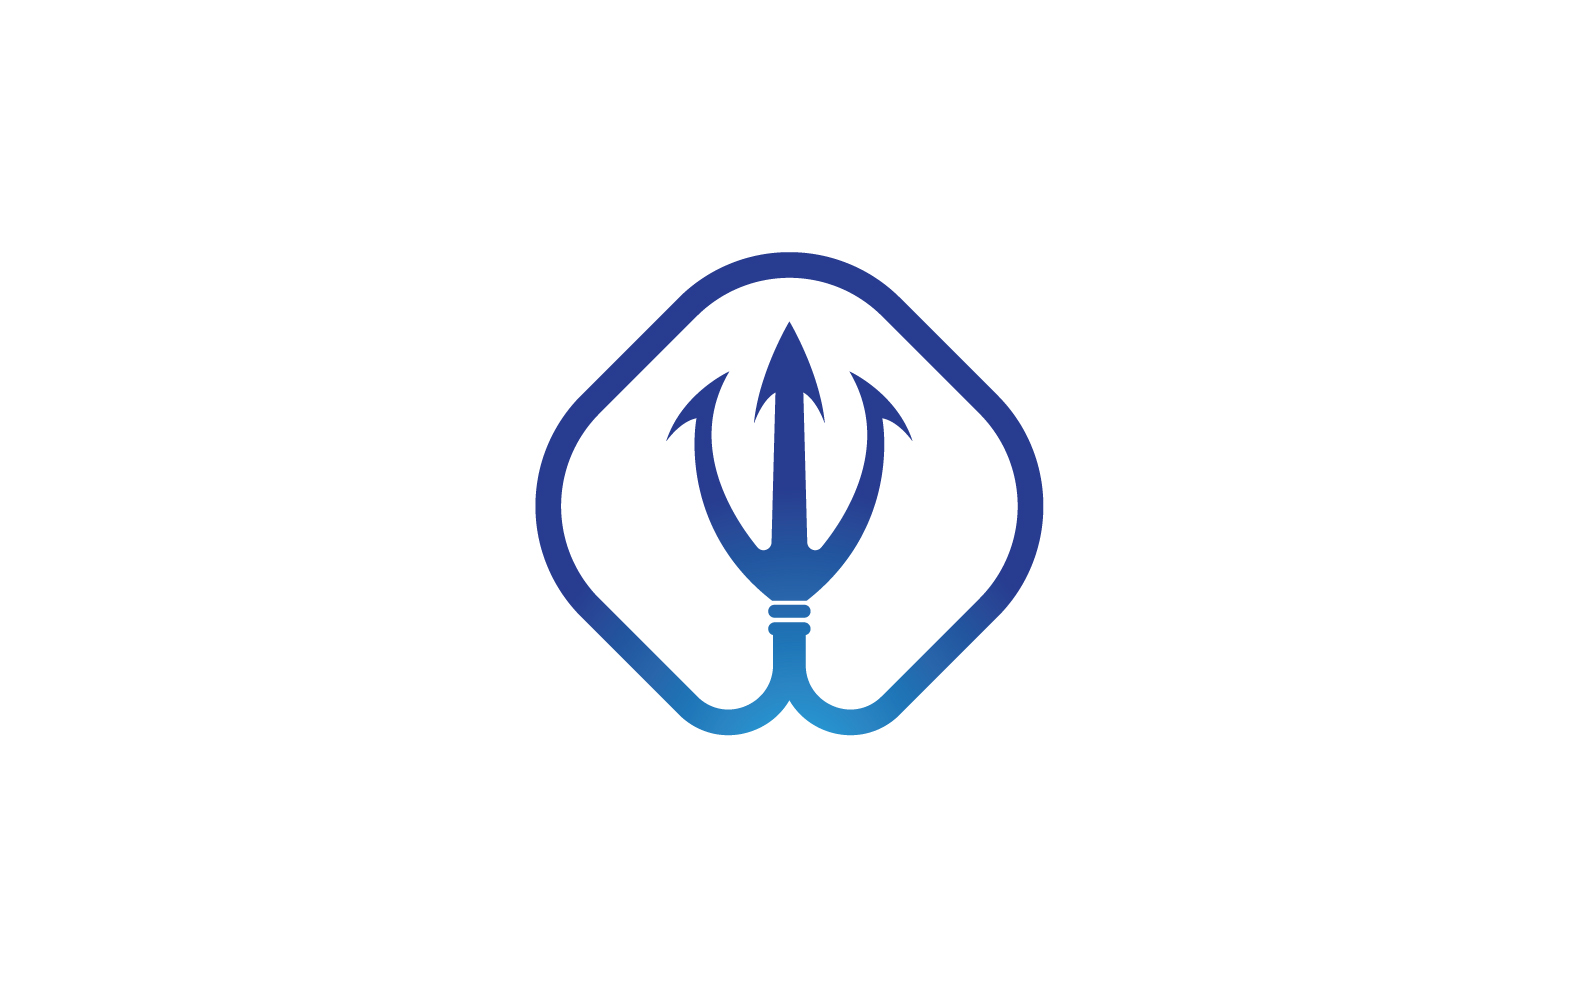 Sword and Magic trident trisula vector logo design element v9